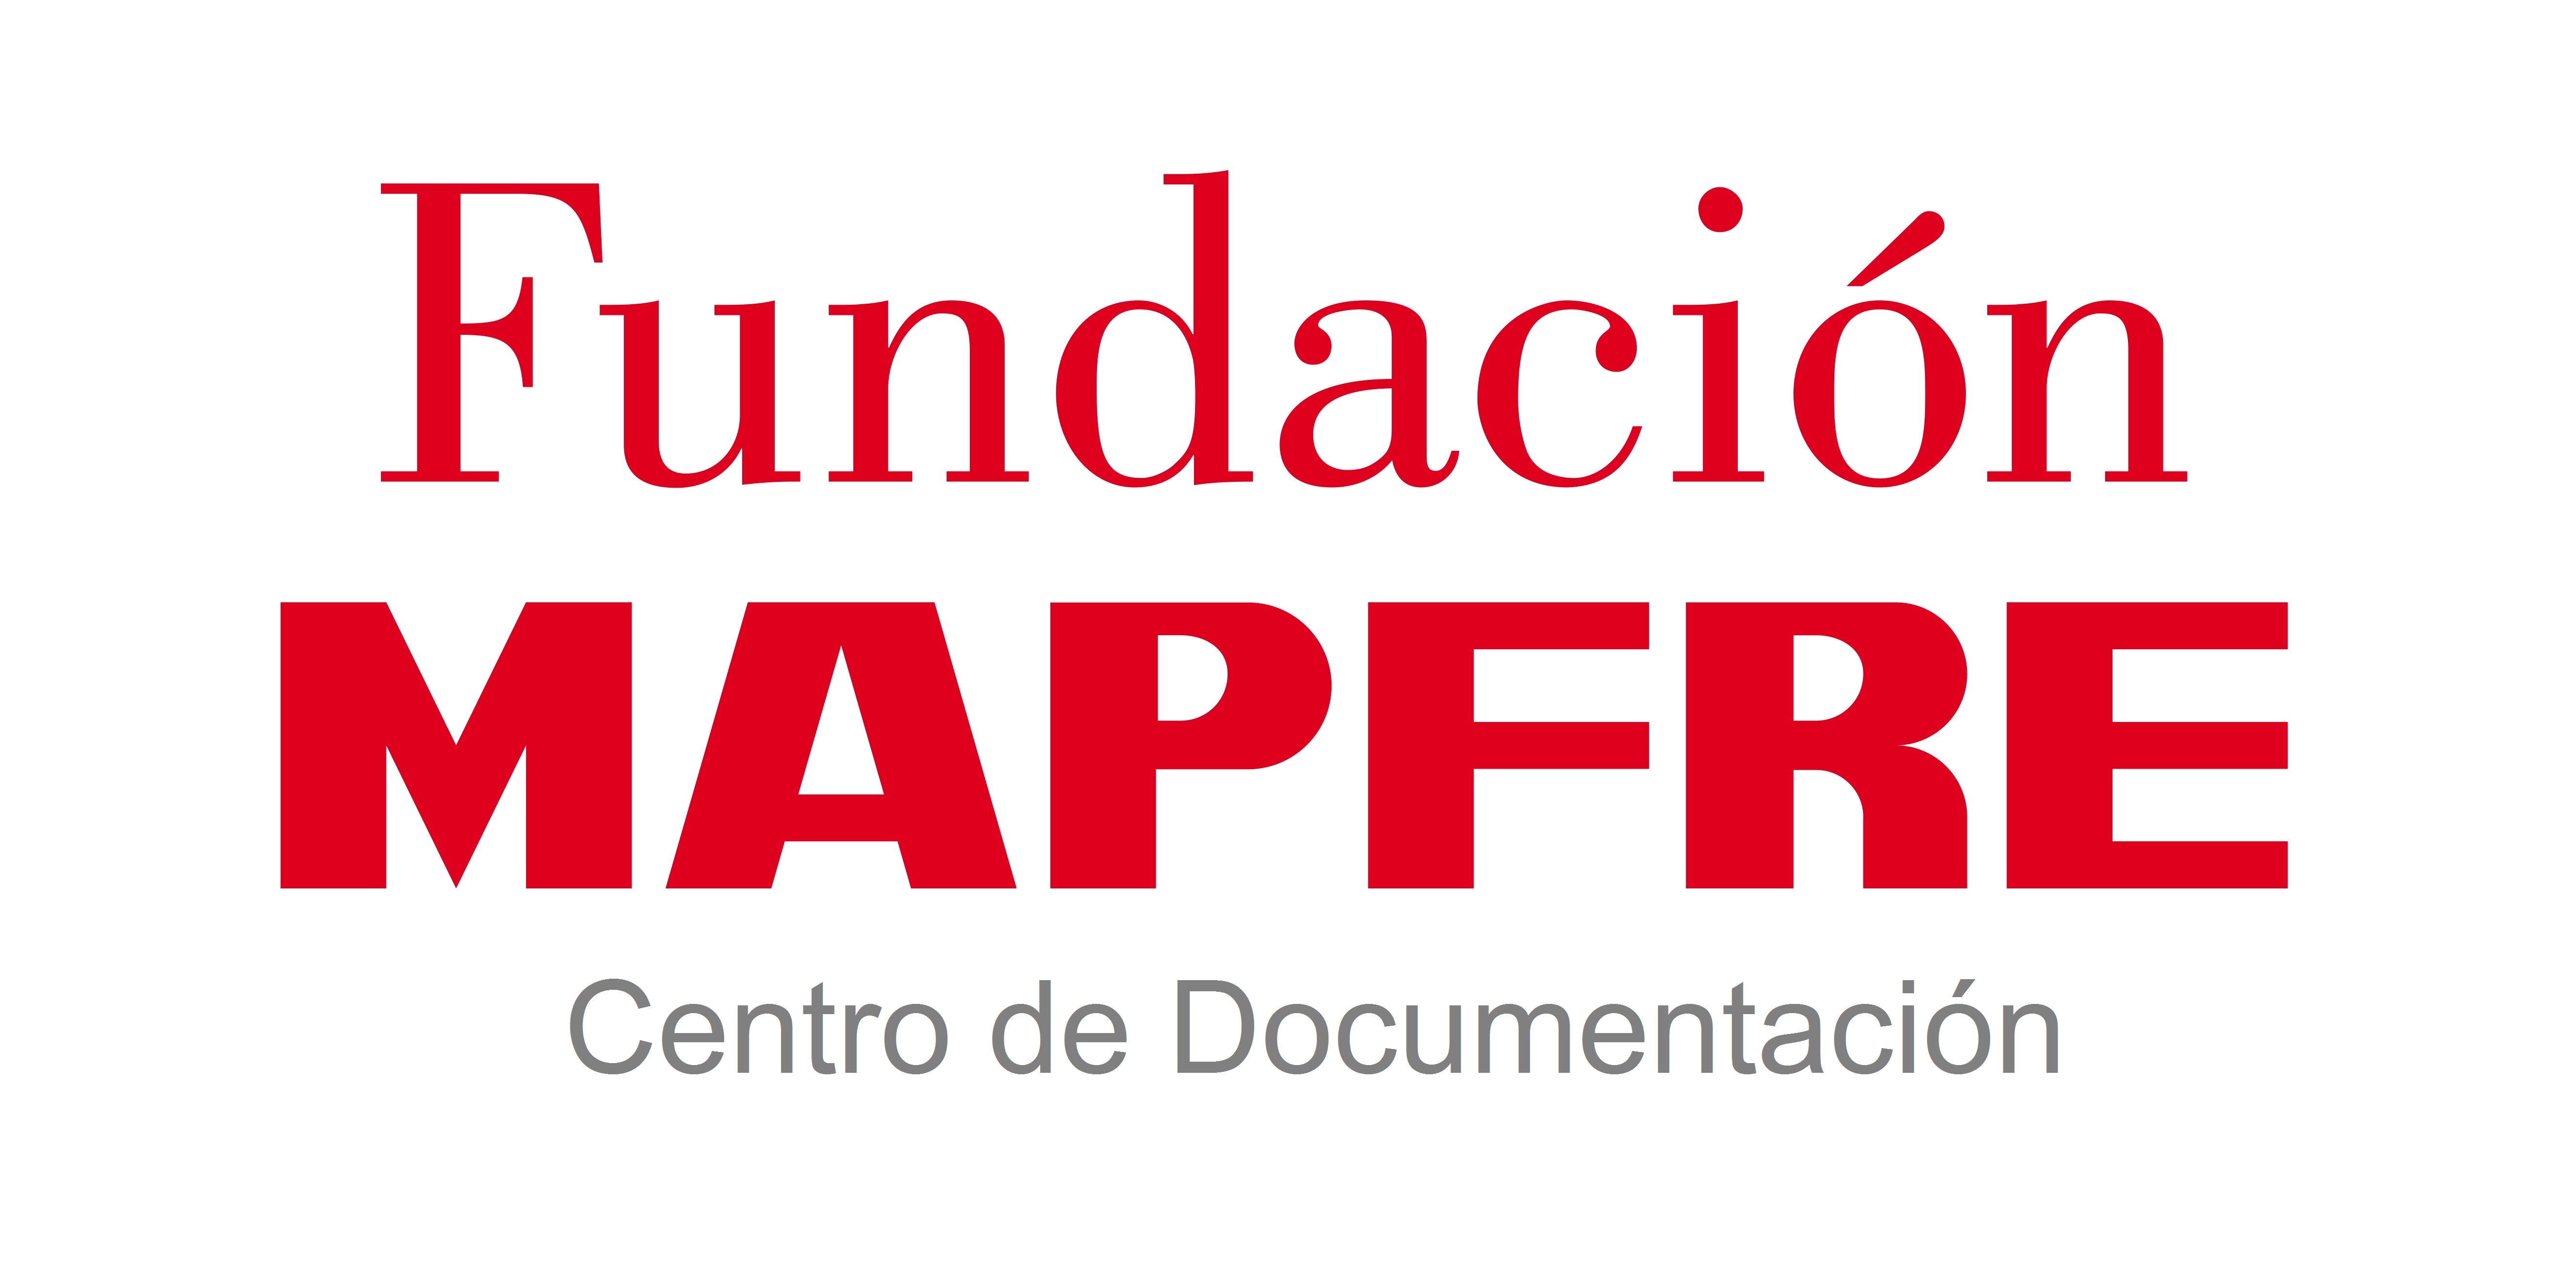 Logo of Fundación MAPFRE featuring red text and tagline 'Centro de Documentación'.